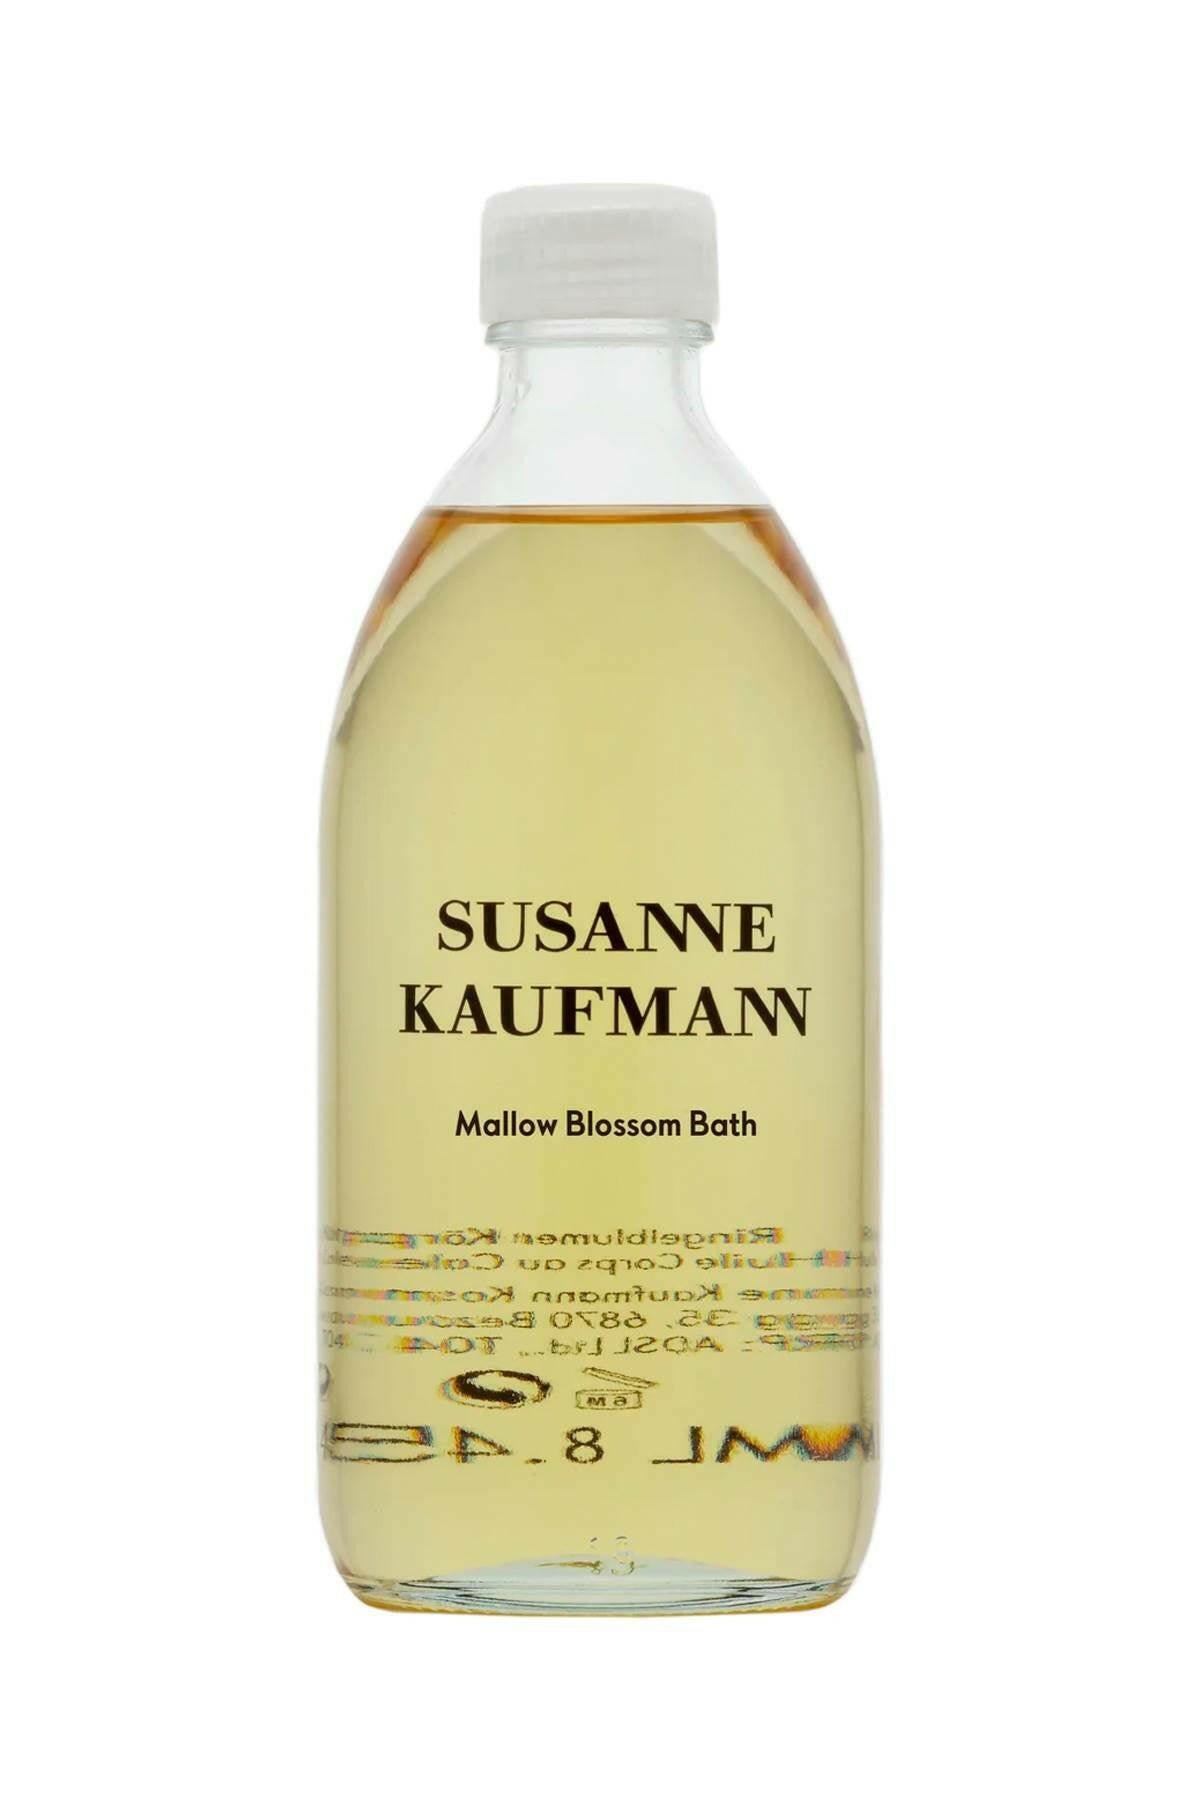 Susanne Kaufmann Mallow Blossom Bath Soak - JOHN JULIA